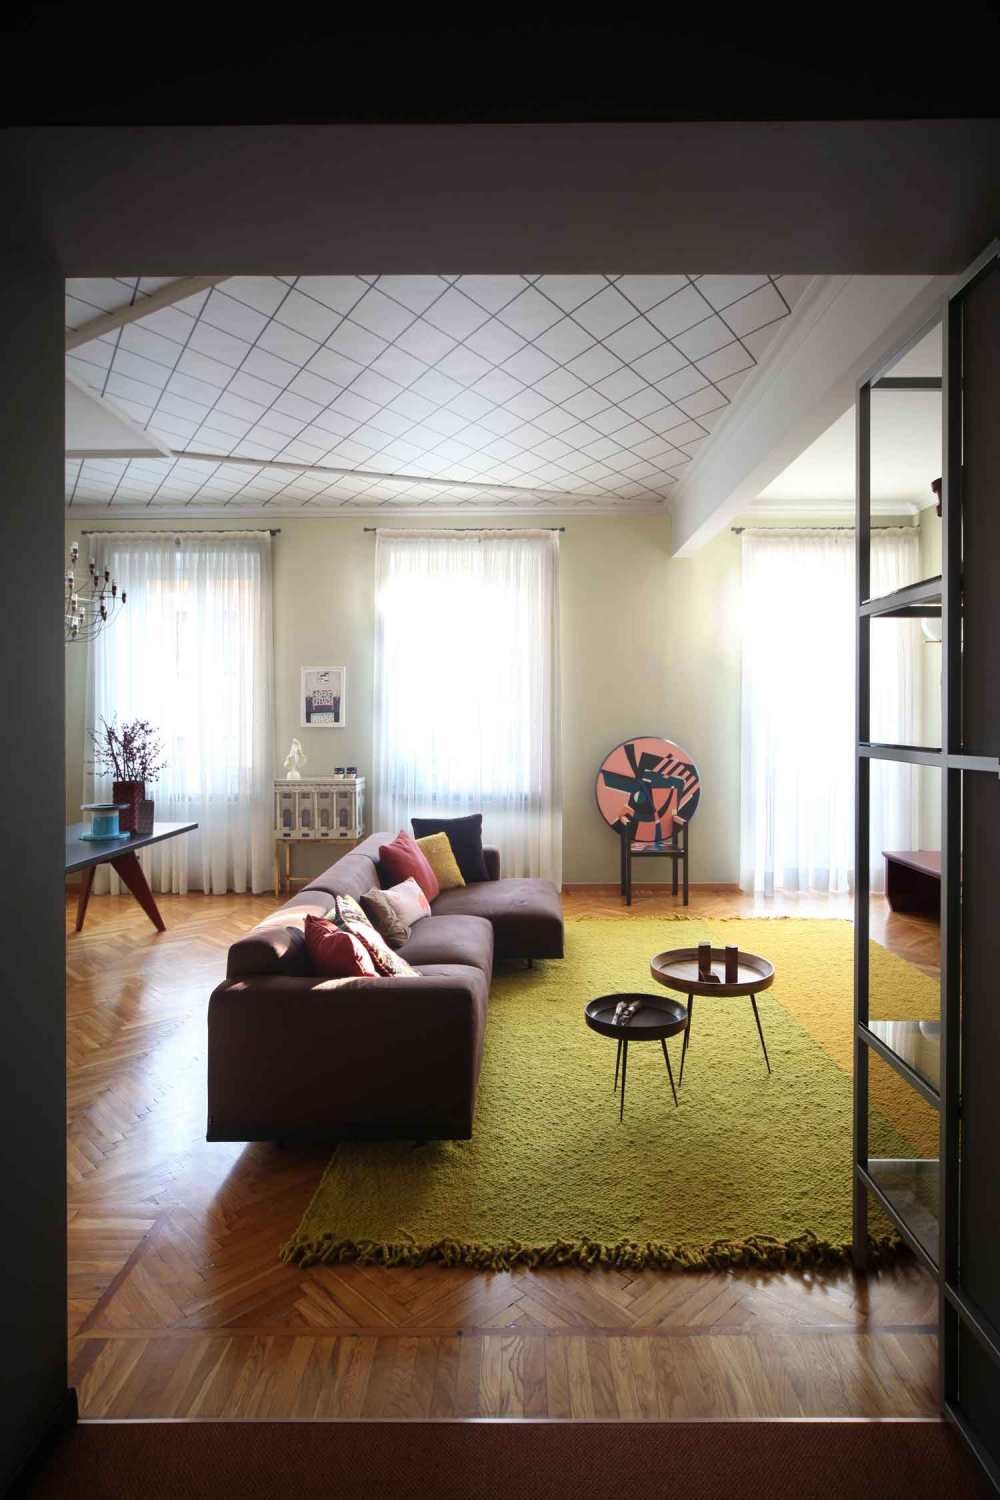 metaphisical-remix-apartment-by-uda-architetti-rushi-01.jpg